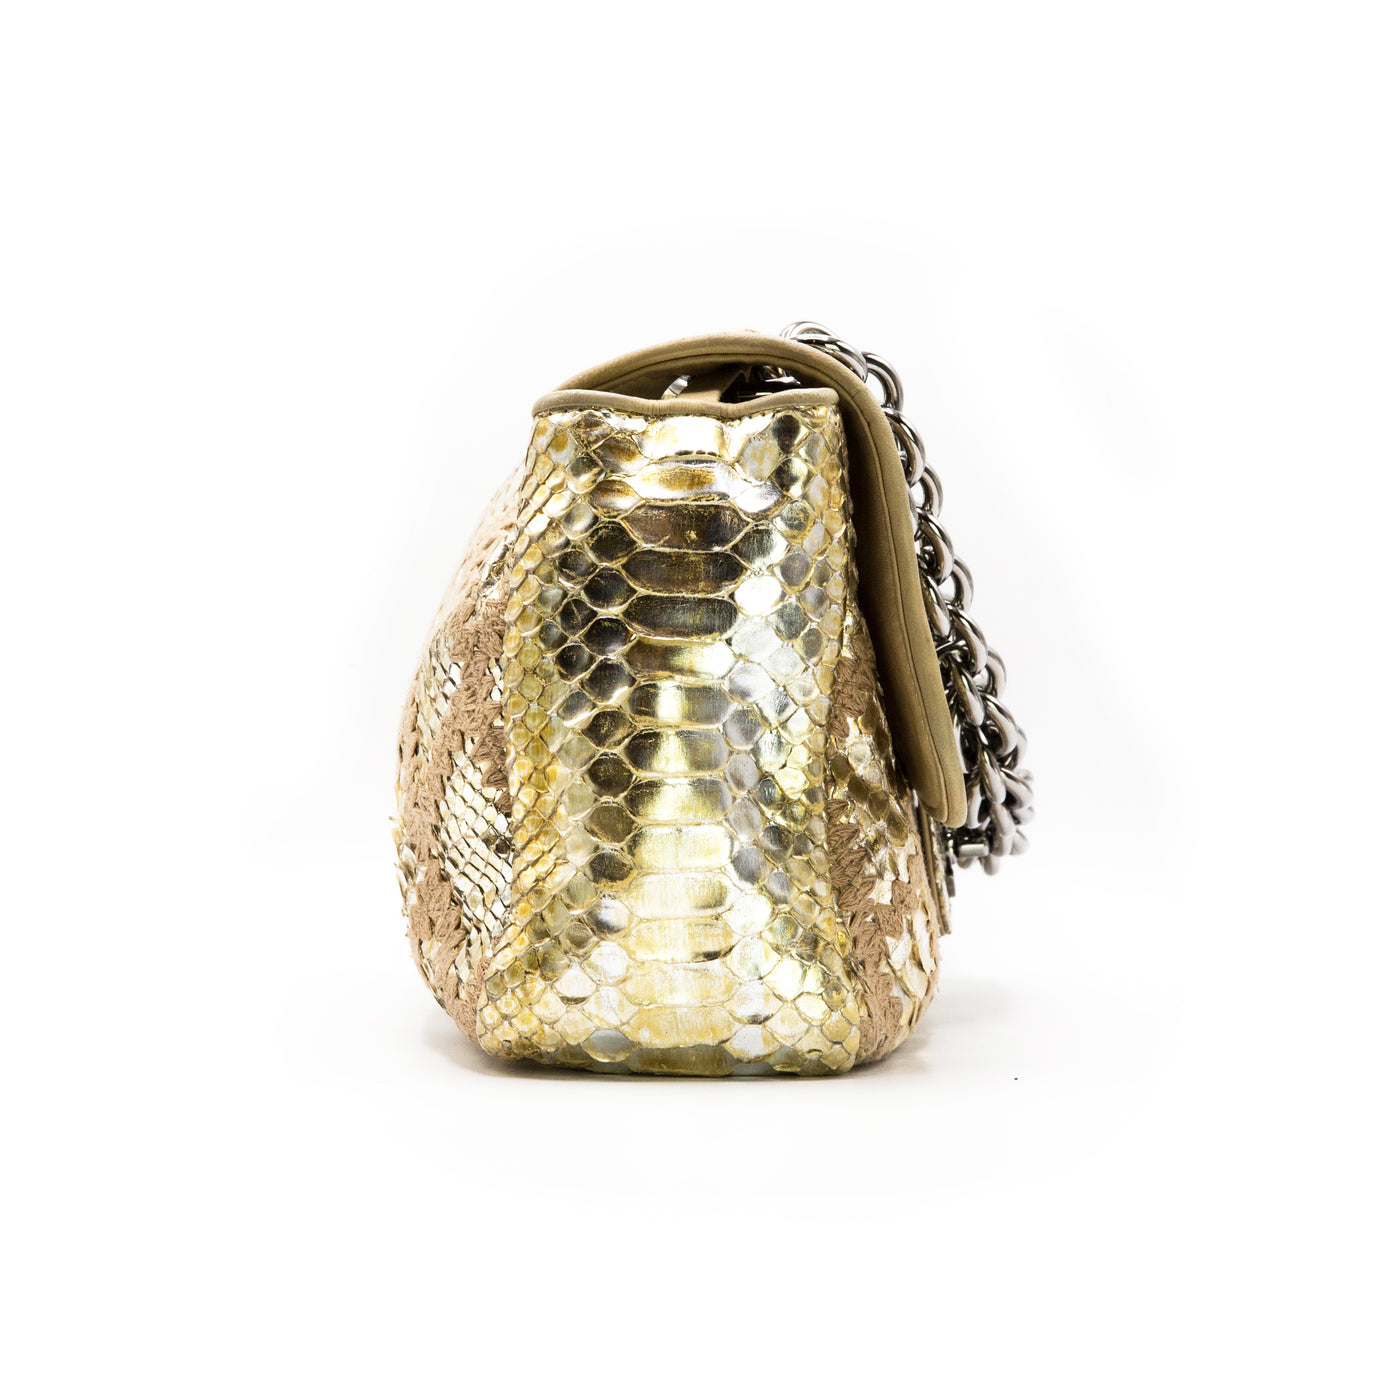 Chanel Gold Metallic Python & Crochet Rare Jumbo Flap